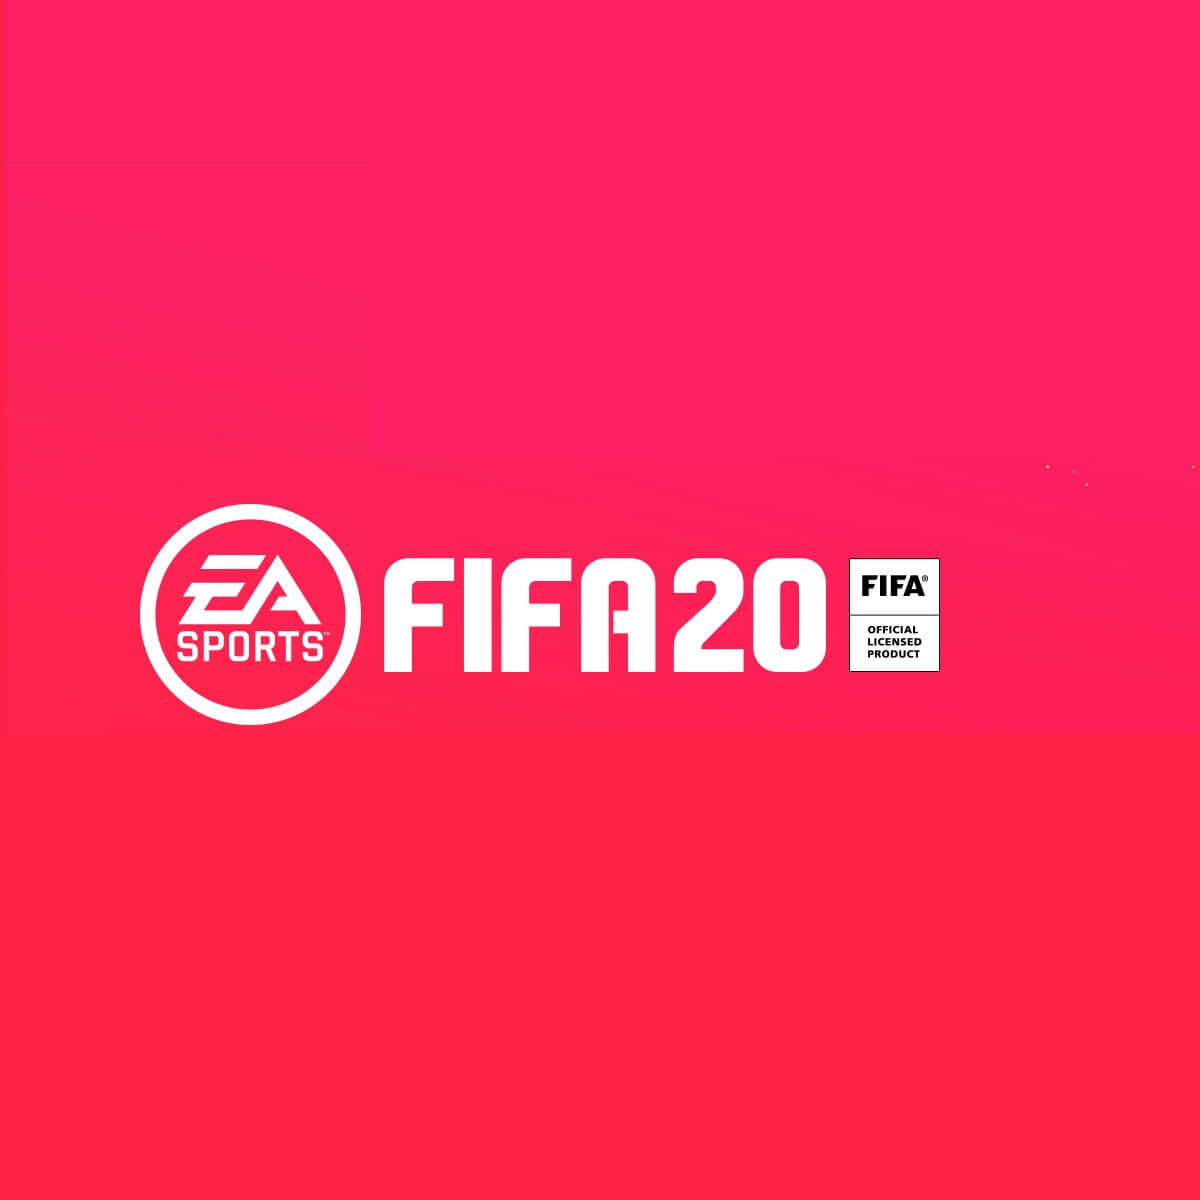 FIFA 20 won't bid